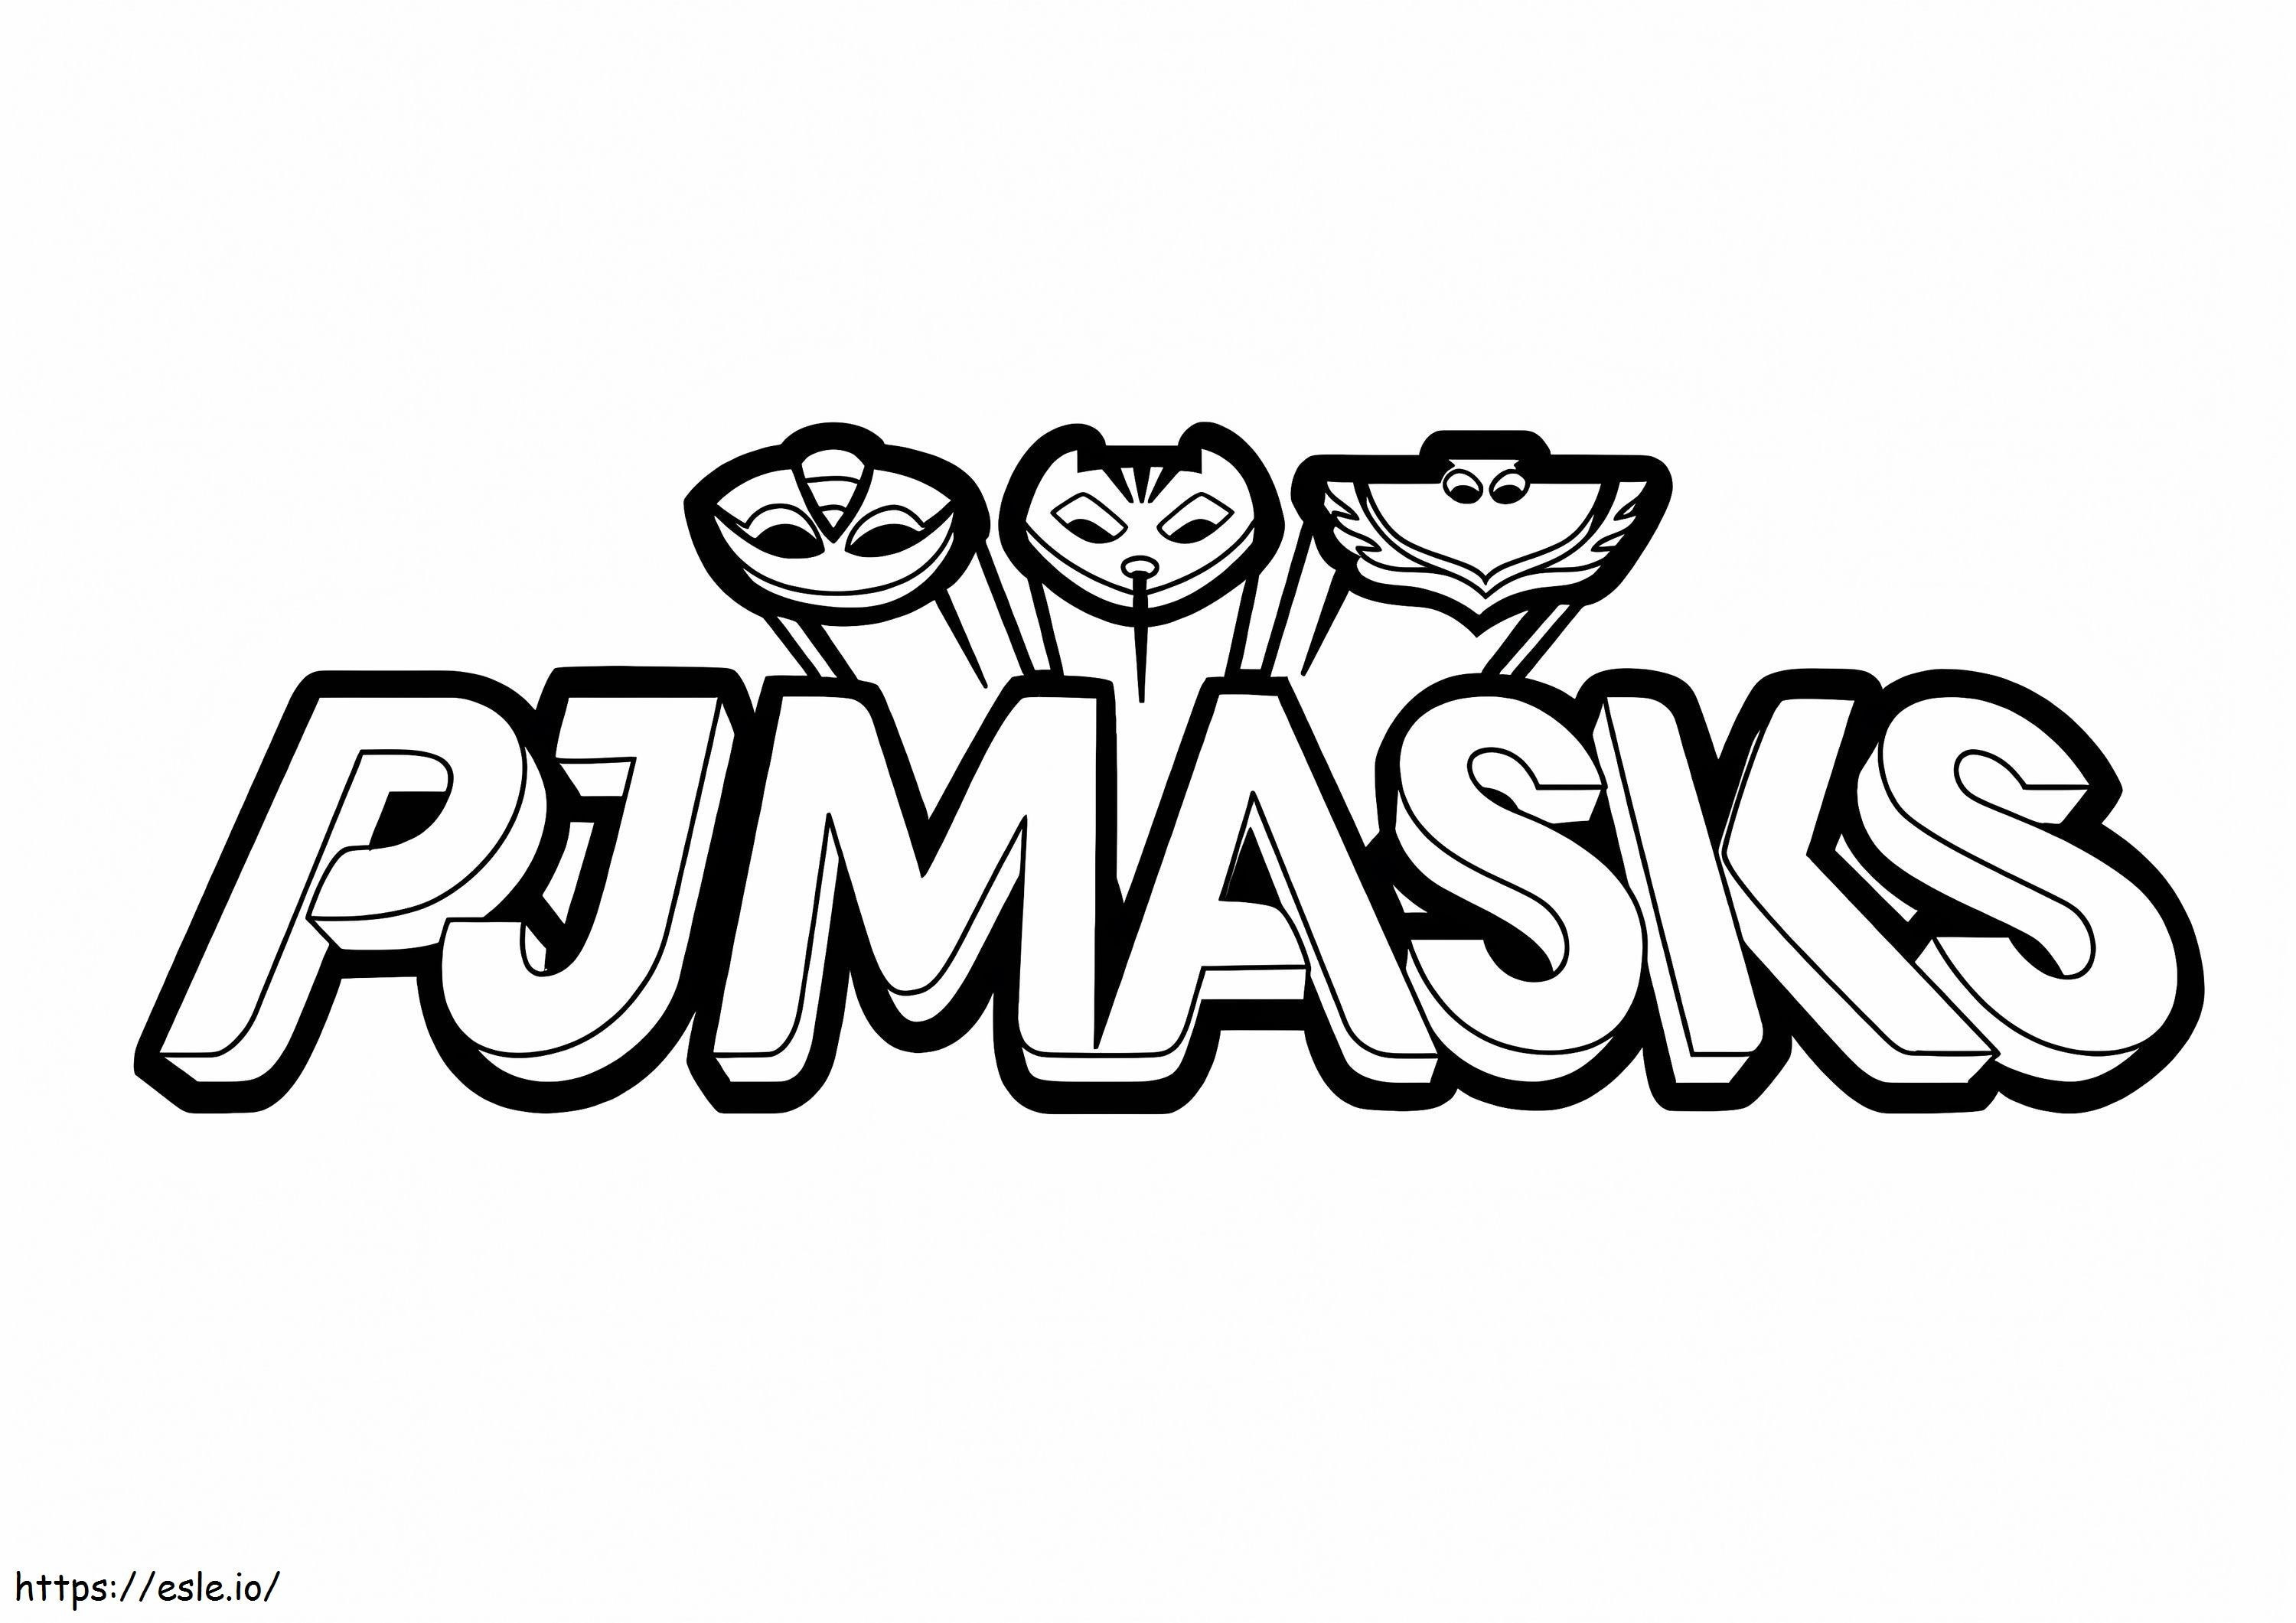 PJ Masks Logo coloring page